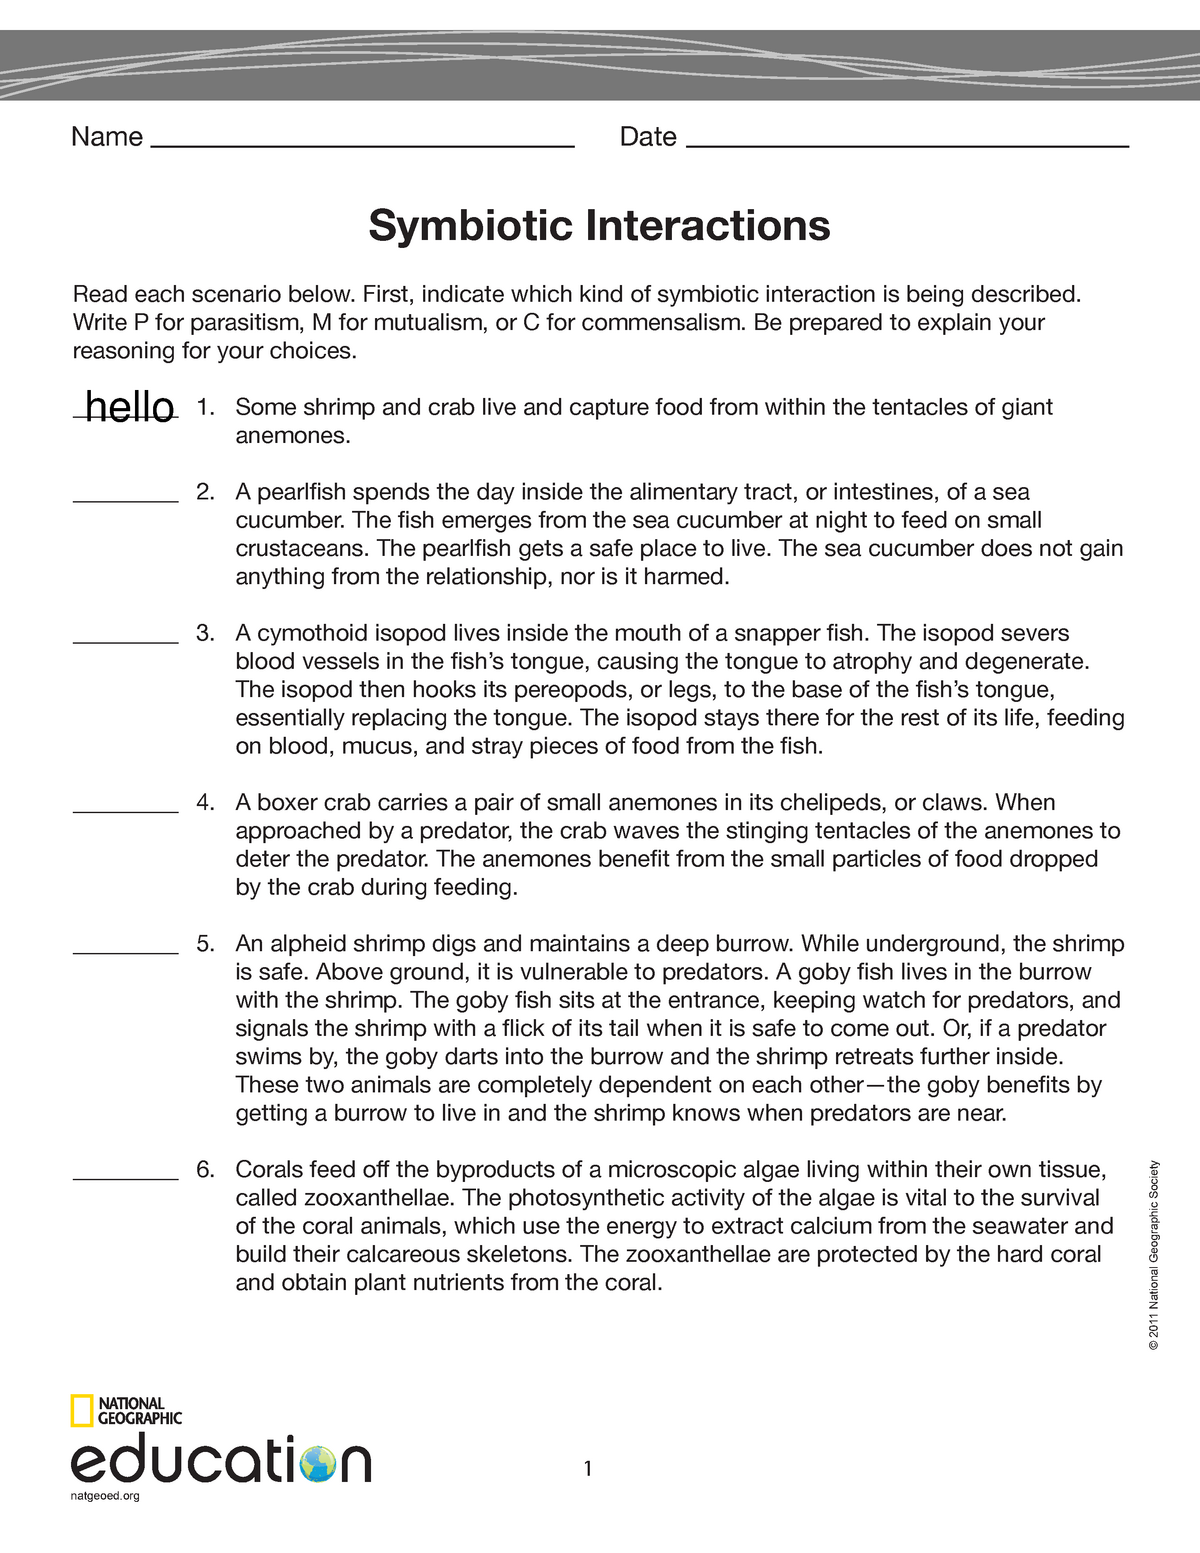 Symbiotic Interactions worksheet - 25 - Sport Management - StuDocu With Symbiosis Worksheet Answer Key